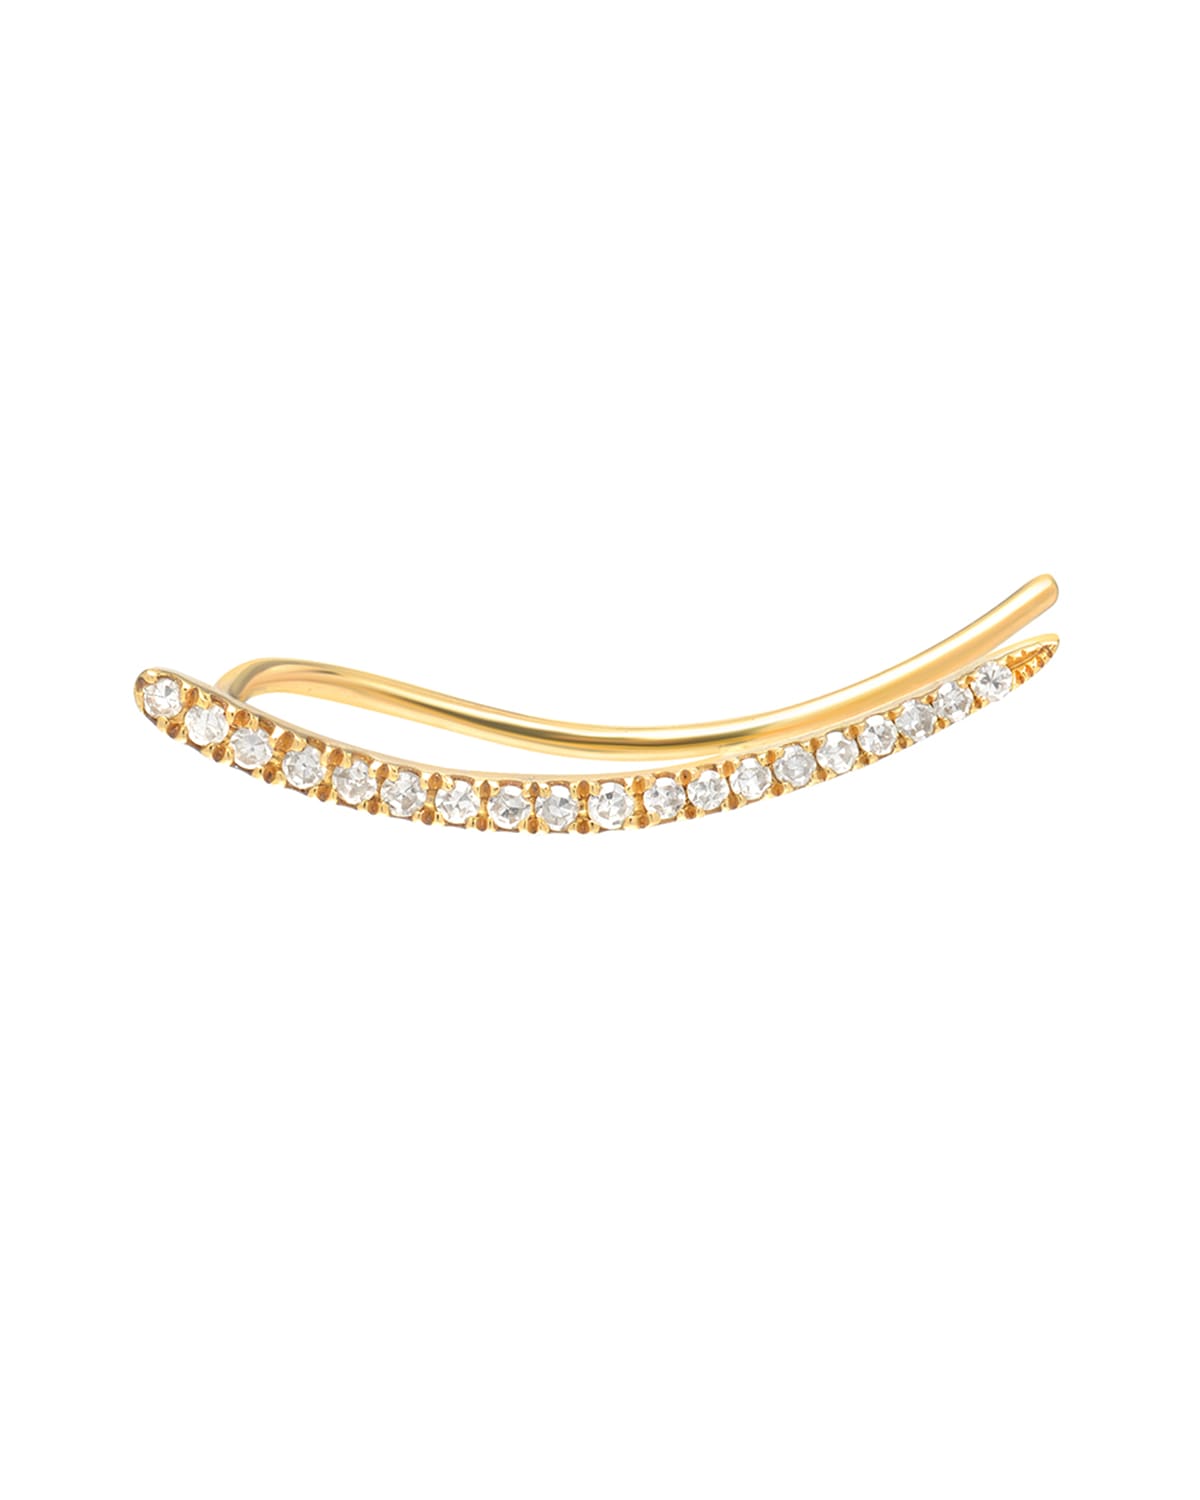 Zoe Lev Jewelry 14k Gold Diamond Ear Crawler, Single, Left